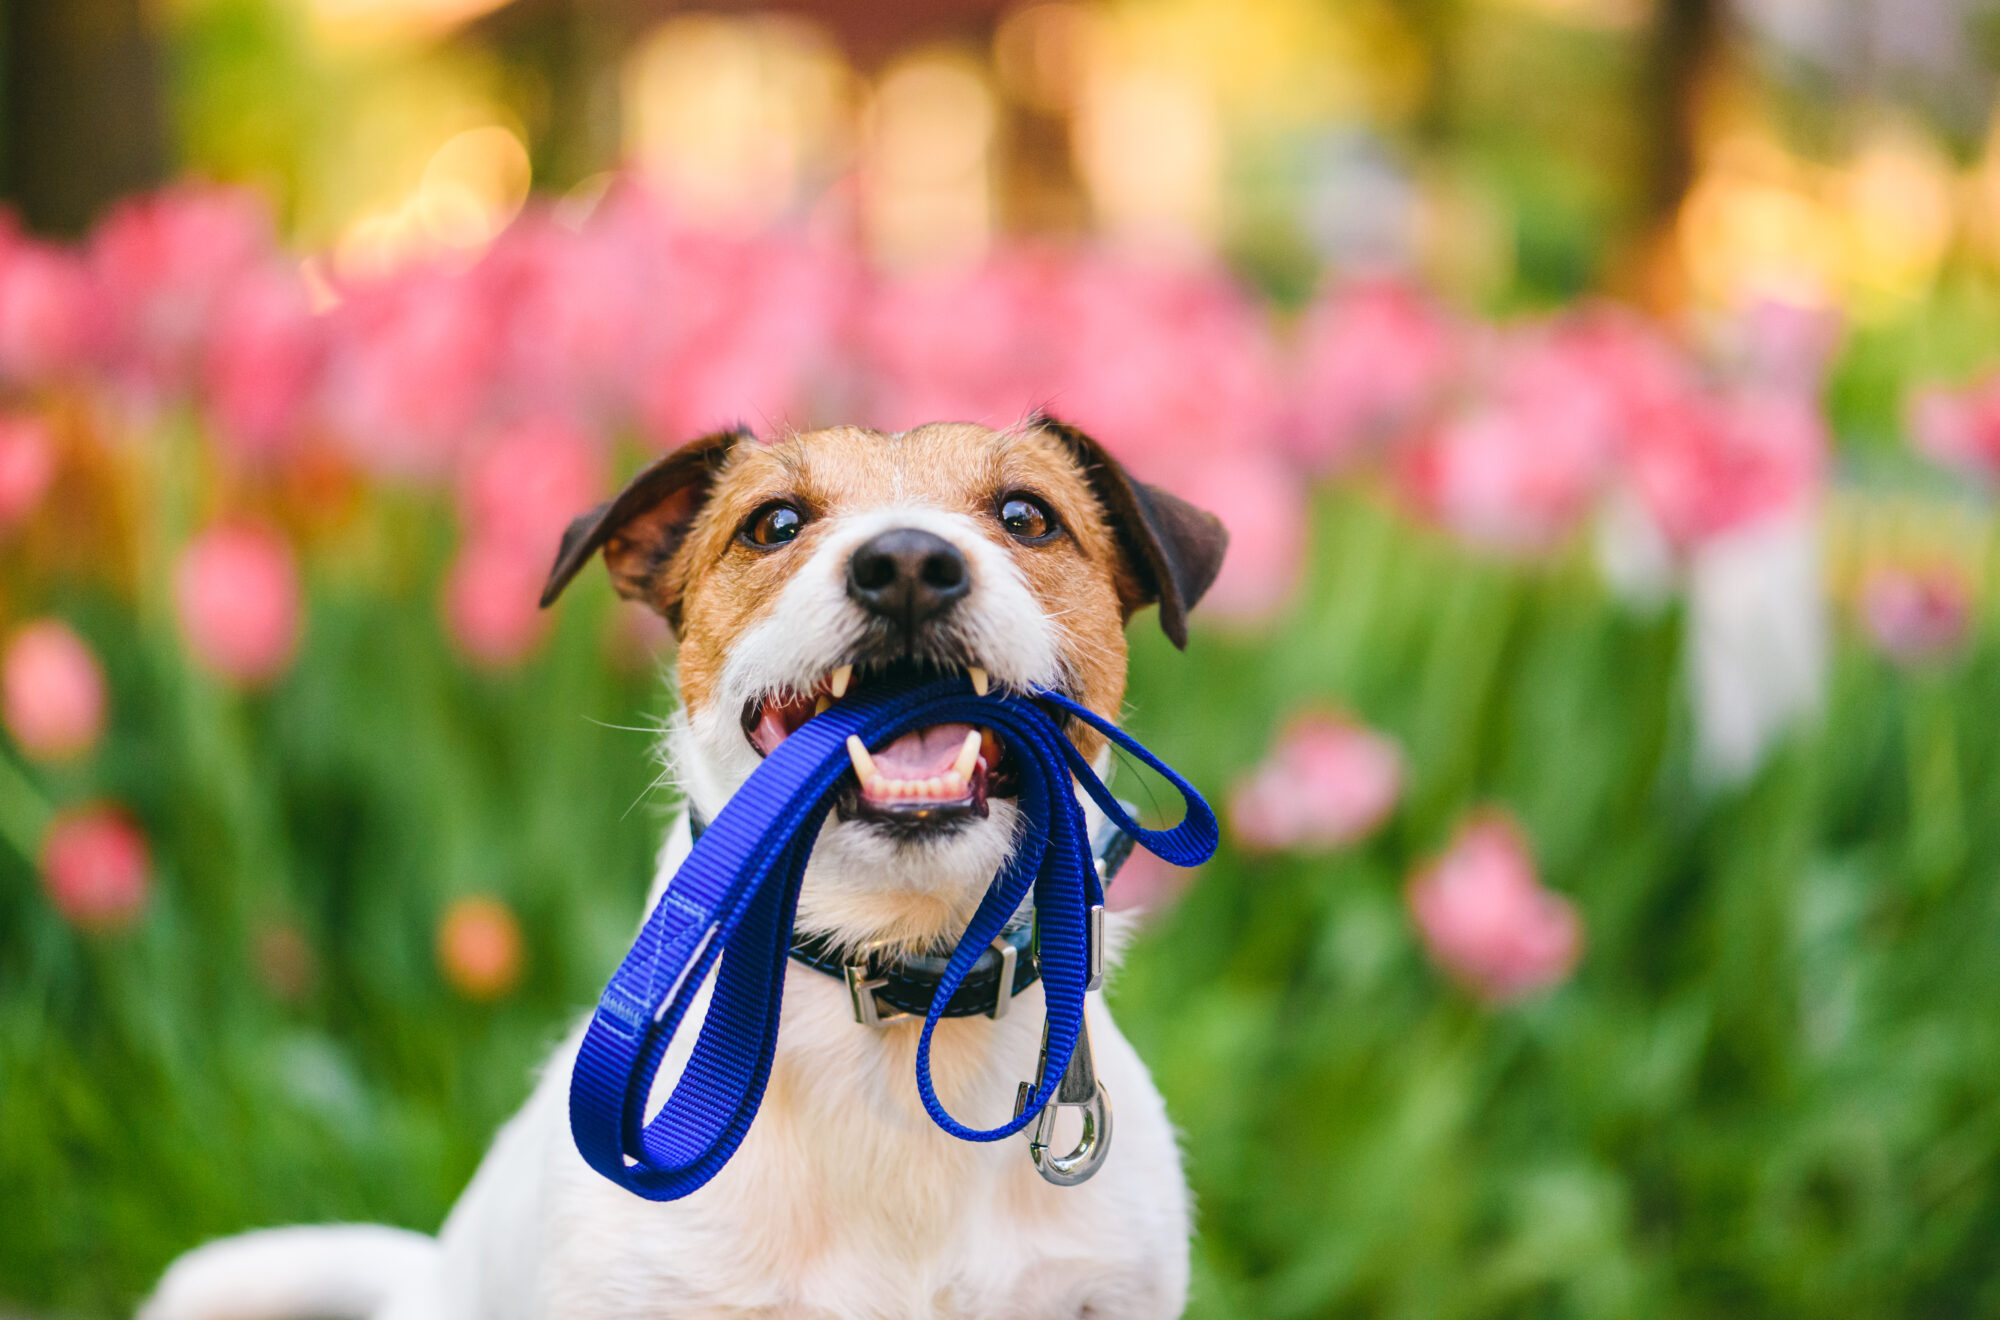 Dog holding a leash.